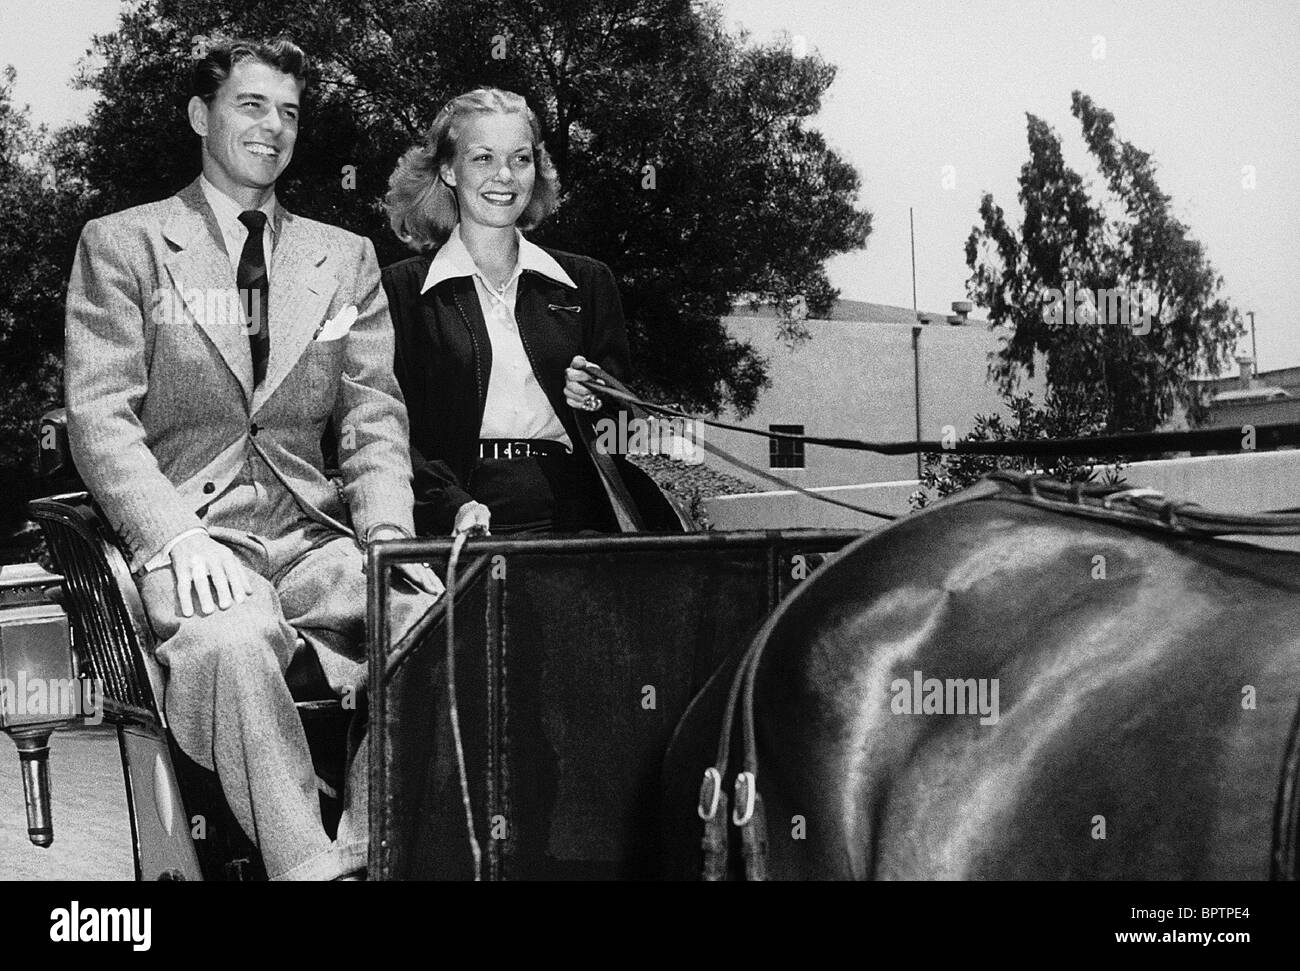 RONALD REAGAN & JANE WYMAN MARRIED ACTOR & ACTRESS (1941) Stock Photo